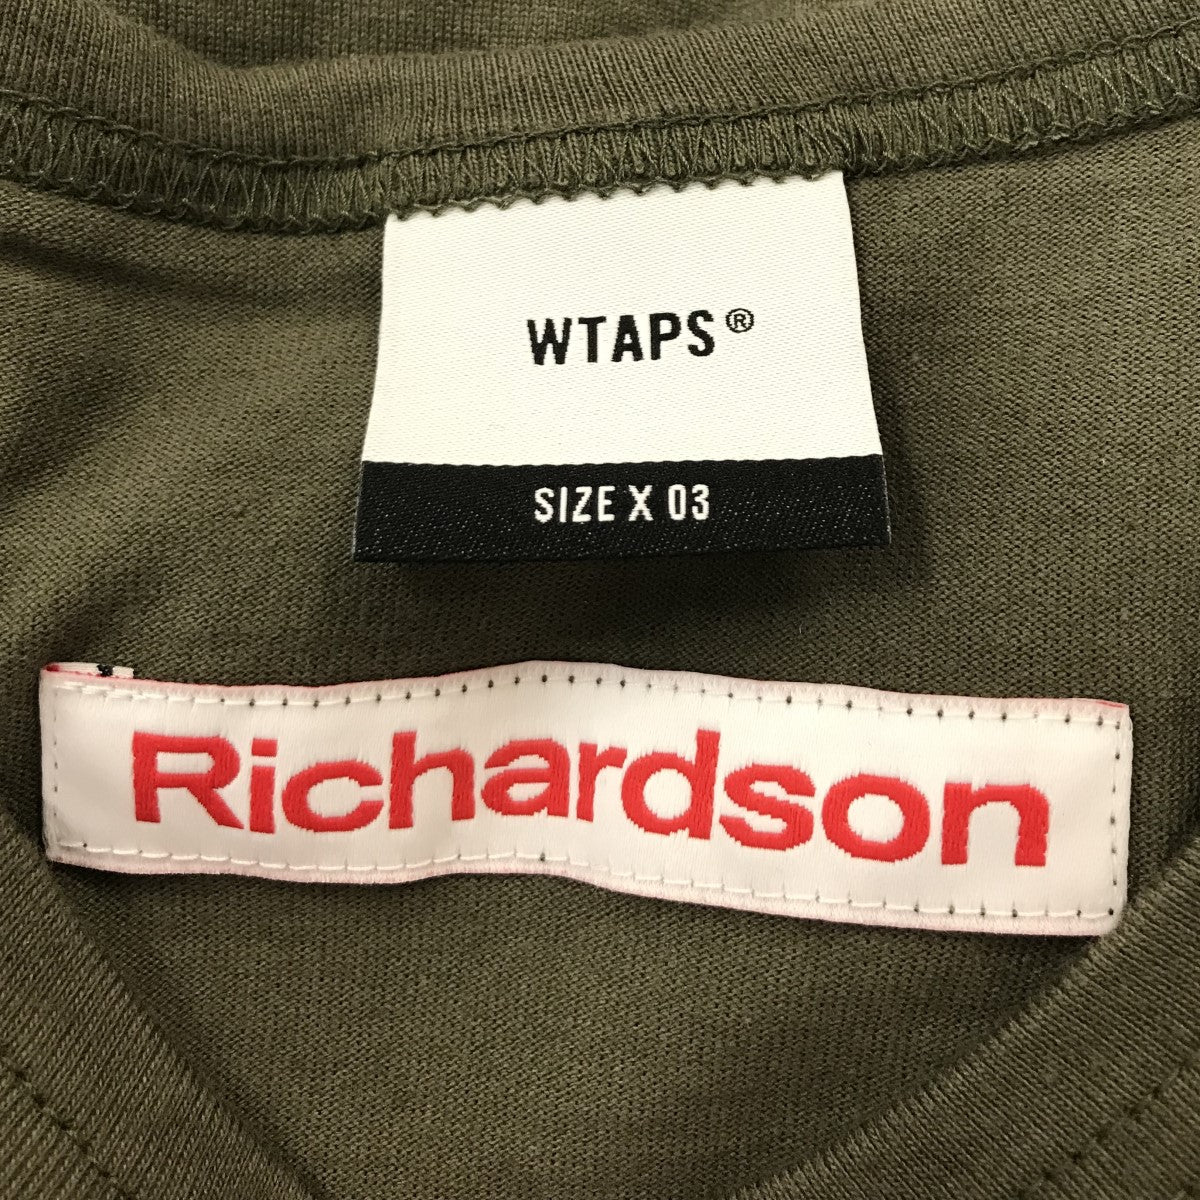 Richardson×WTAPS(リチャードソン×ダブルタップス) 20AW「BIZZ」 ZIP Tシャツ 202ATRID-CSM01S